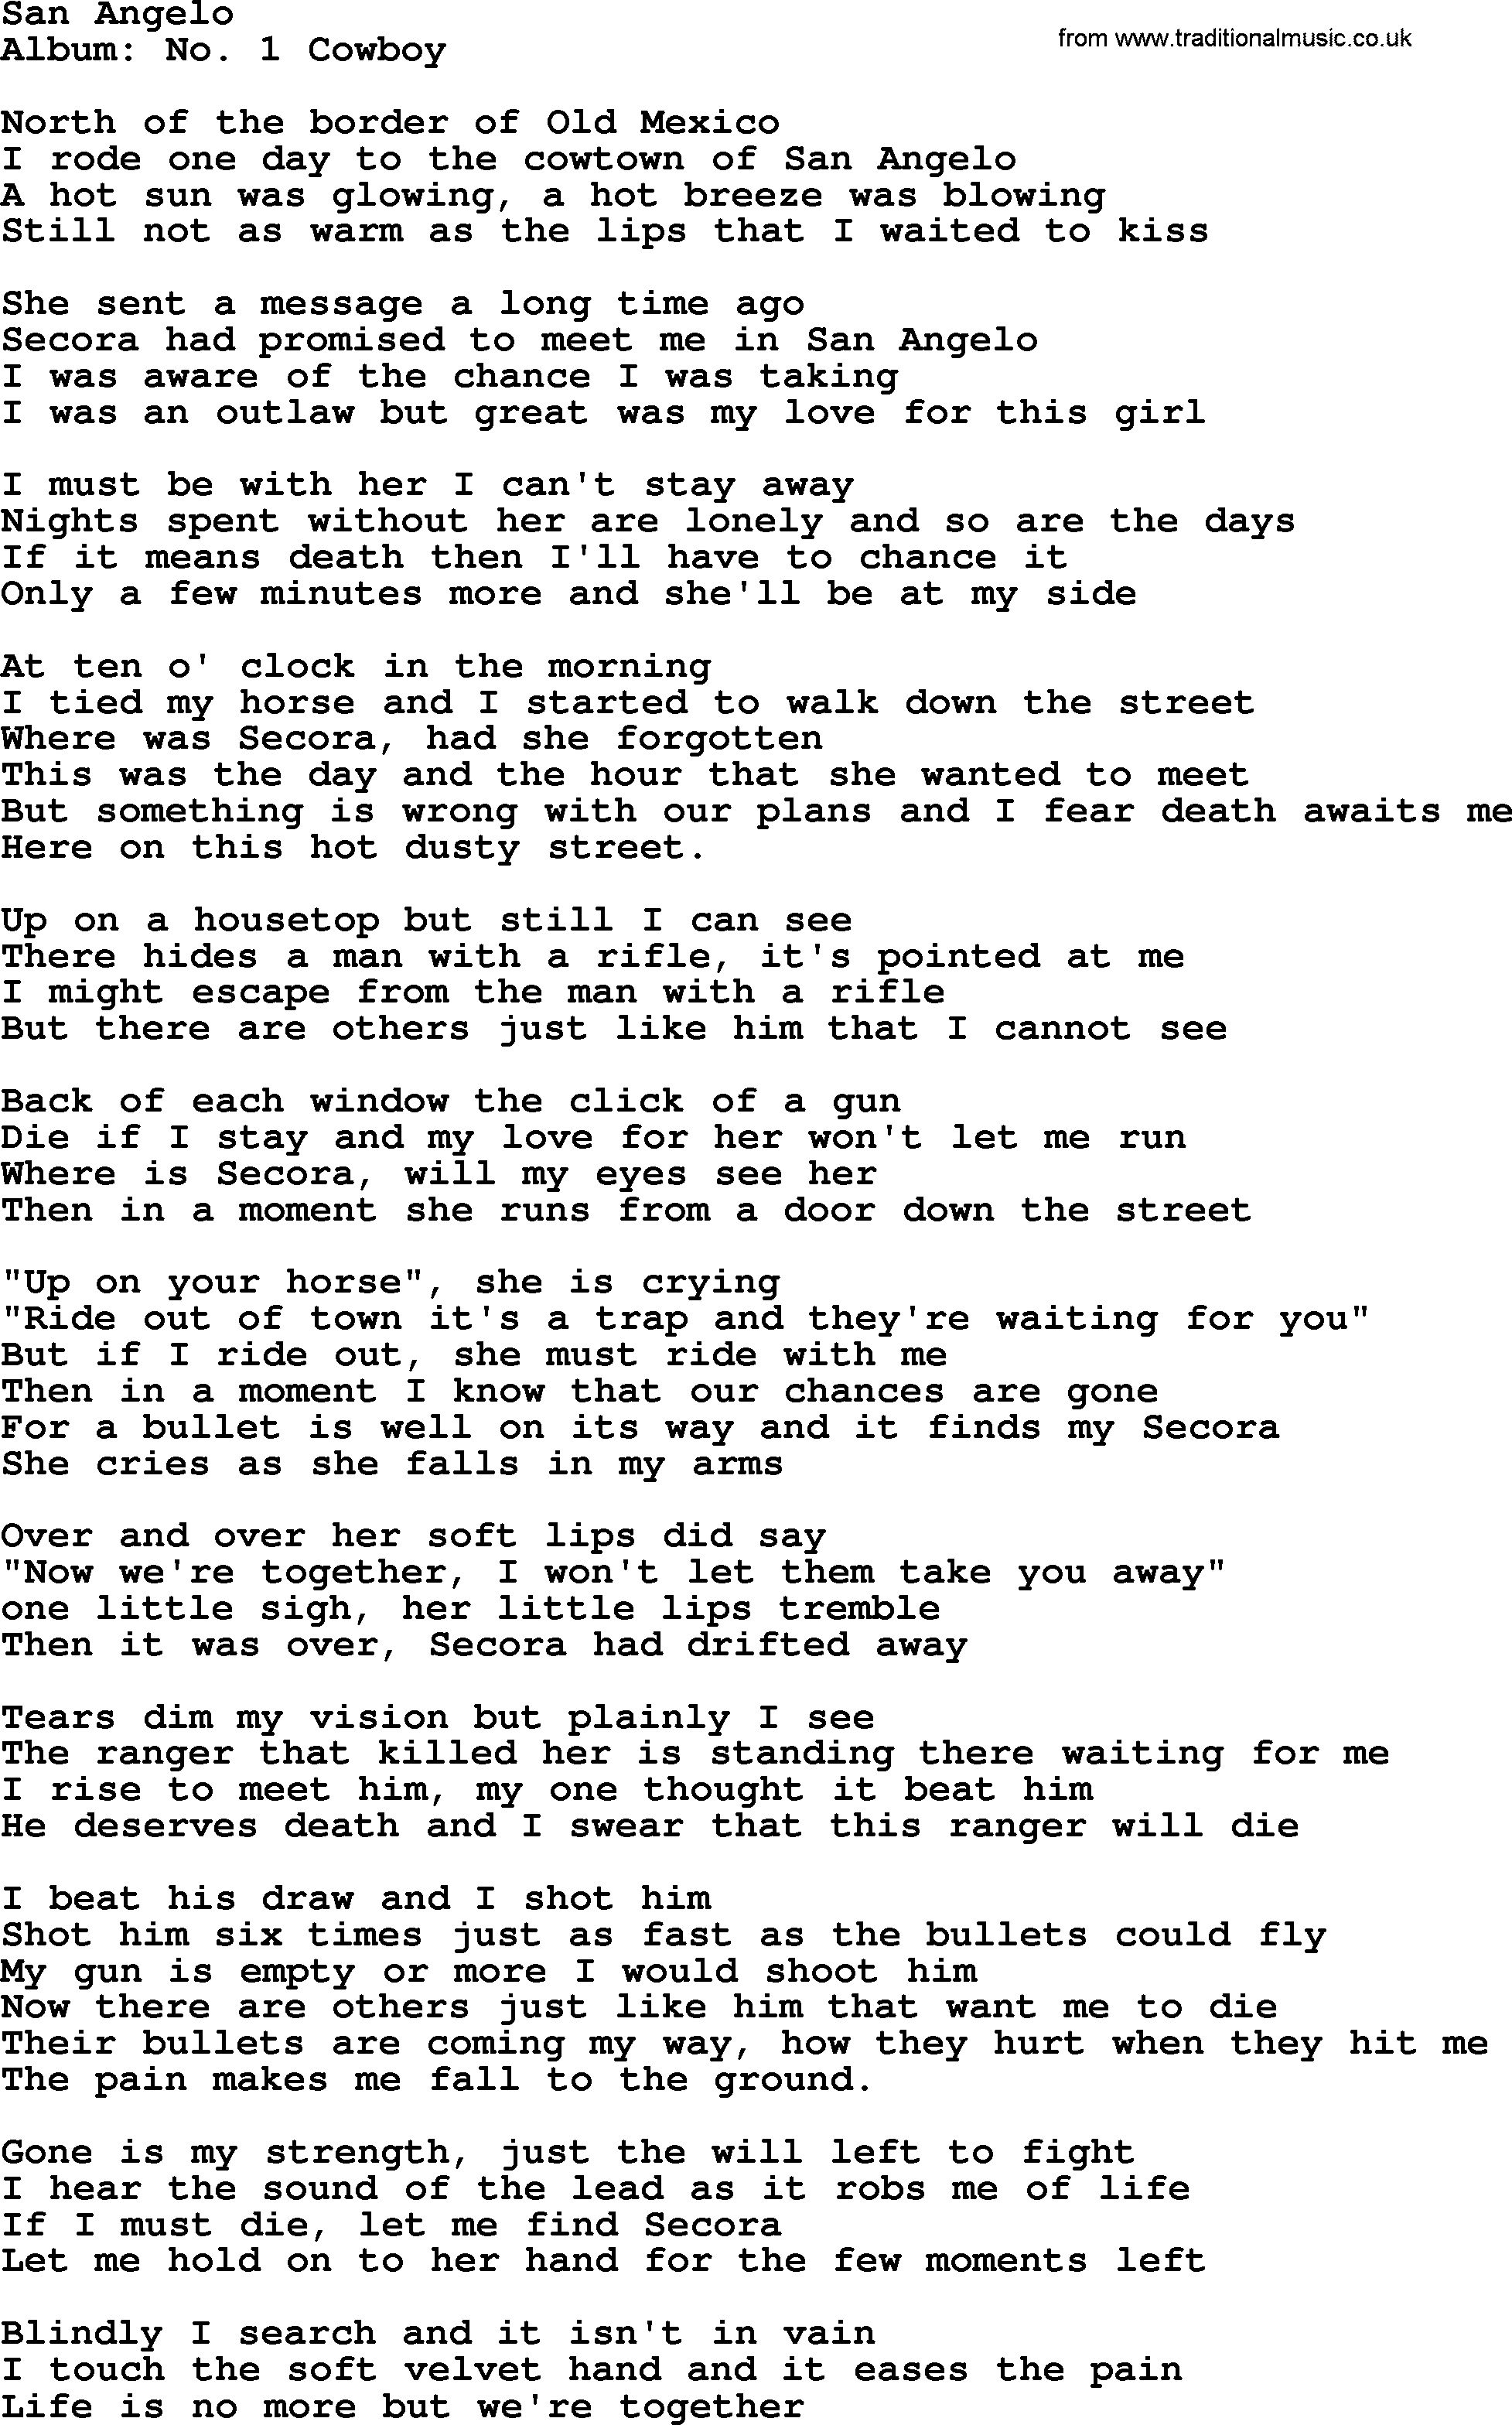 Marty Robbins song: San Angelo, lyrics